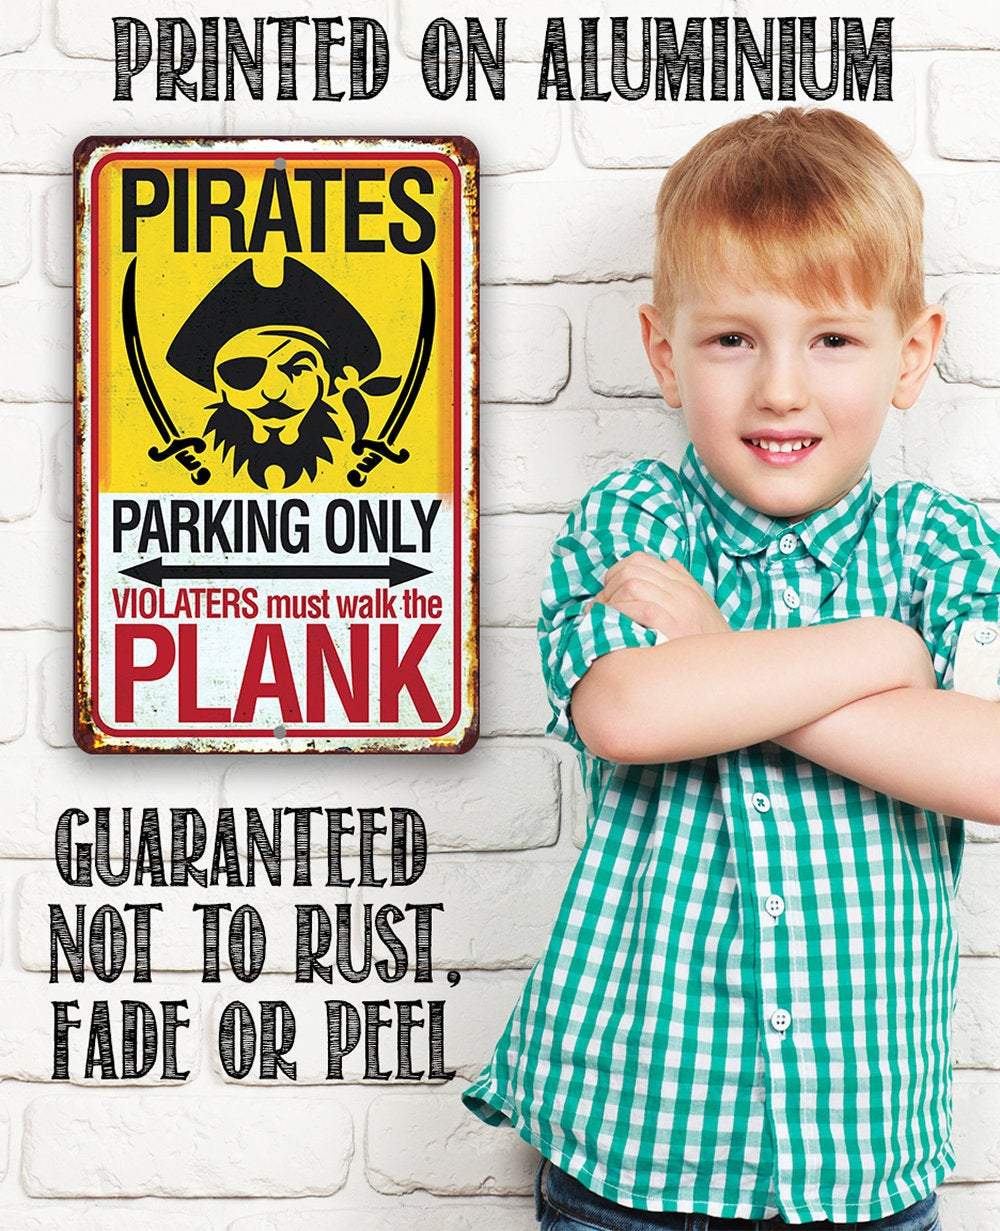 Pirate Parking - Metal Sign | Lone Star Art.